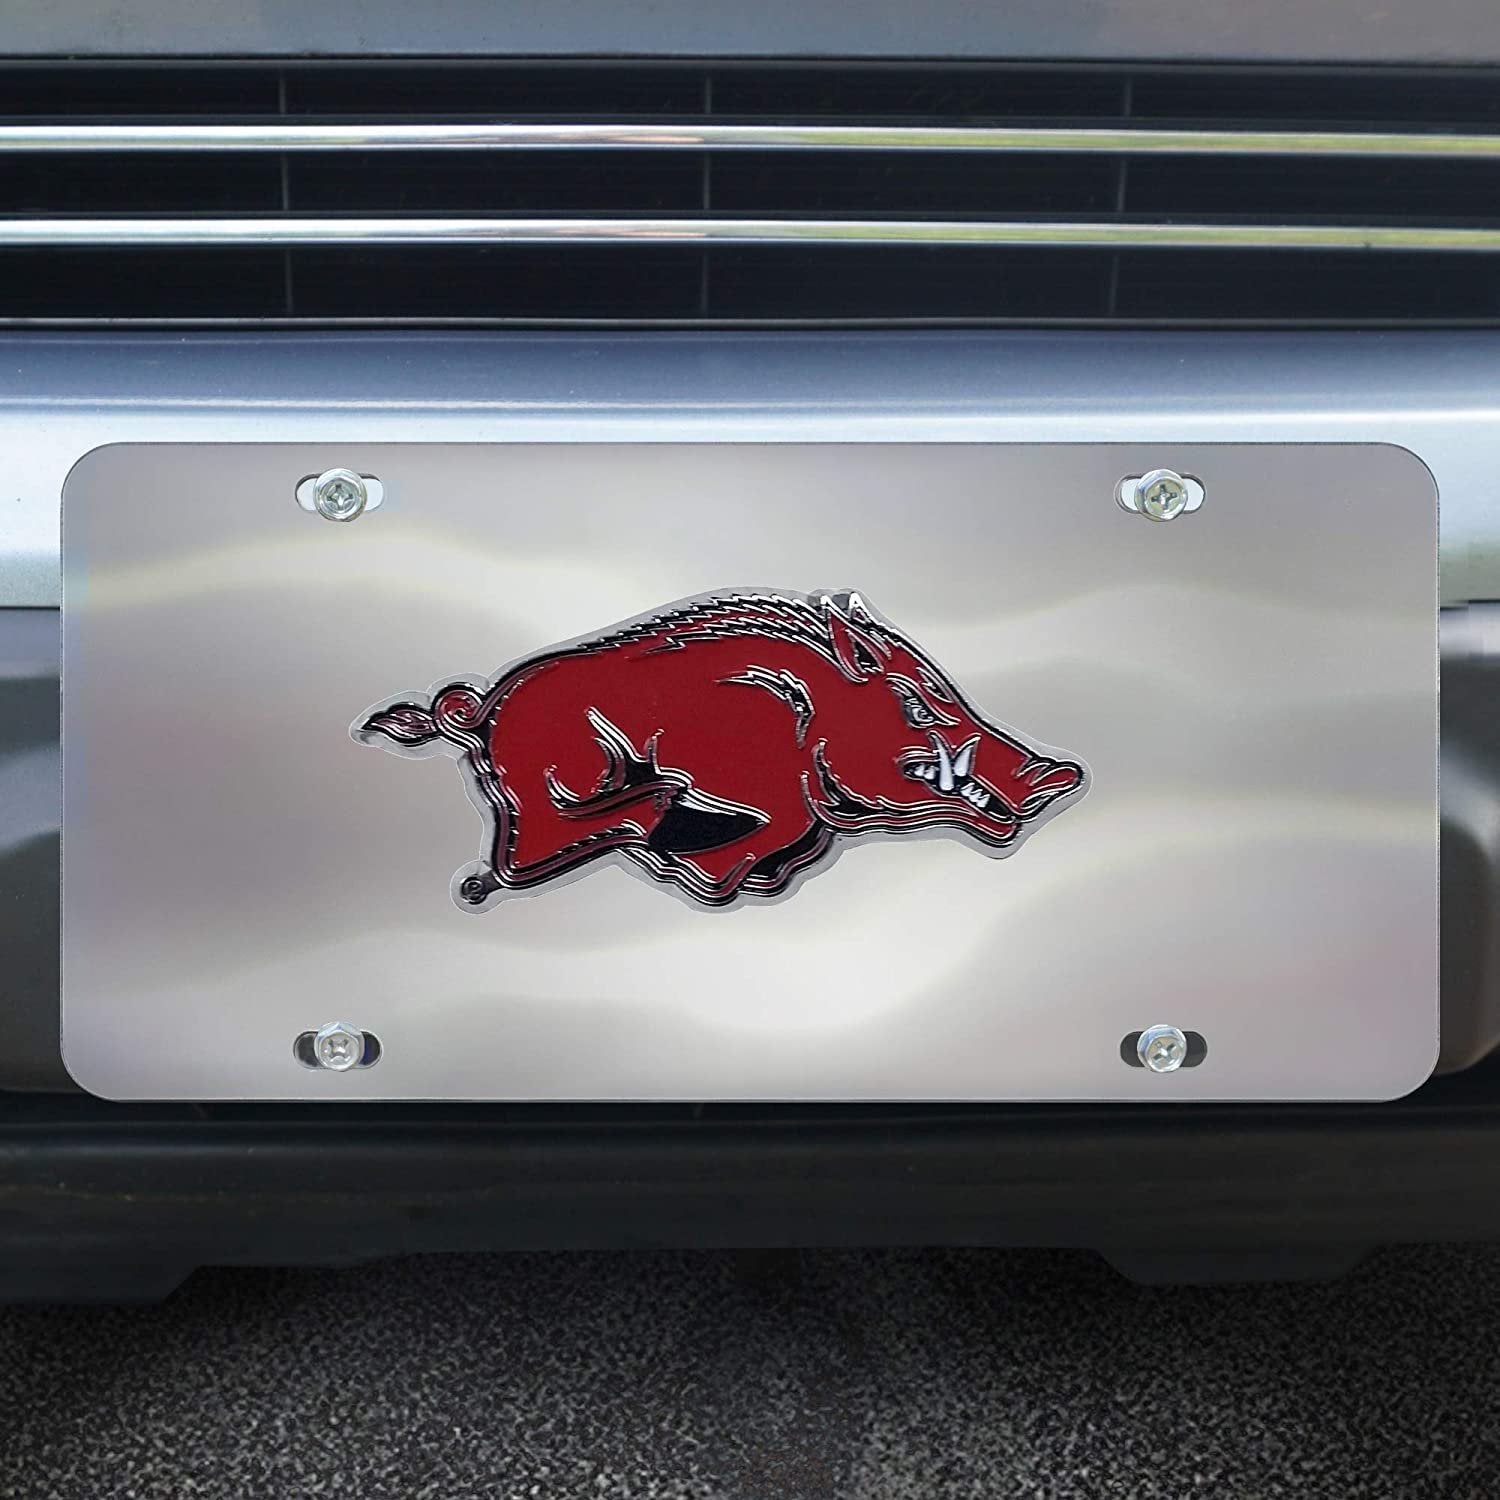 University of Arkansas Razorbacks License Plate Tag, Premium Stainless Steel Diecast, Chrome, Raised Solid Metal Color Emblem, 6x12 Inch